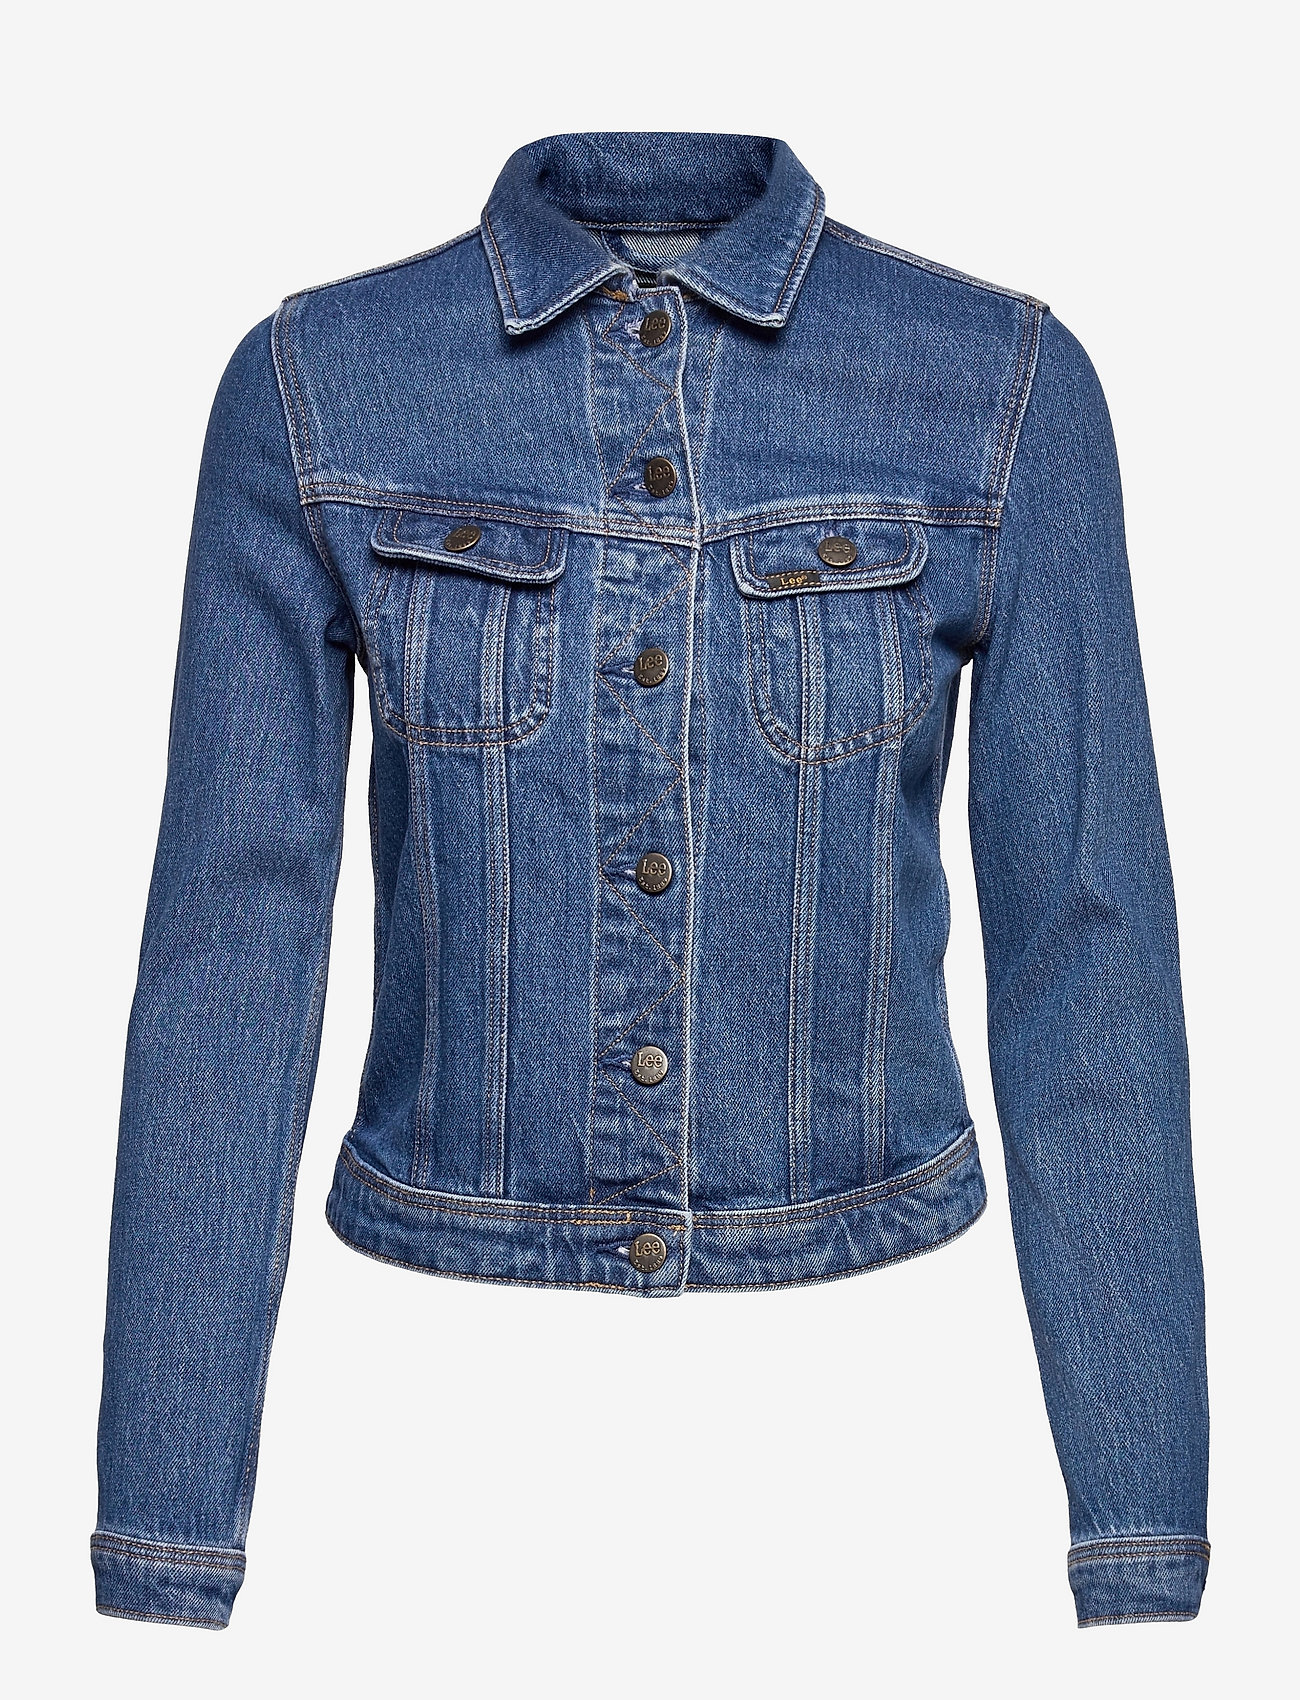 Lee Jeans Rider Jacket Denim jackets | Boozt.com